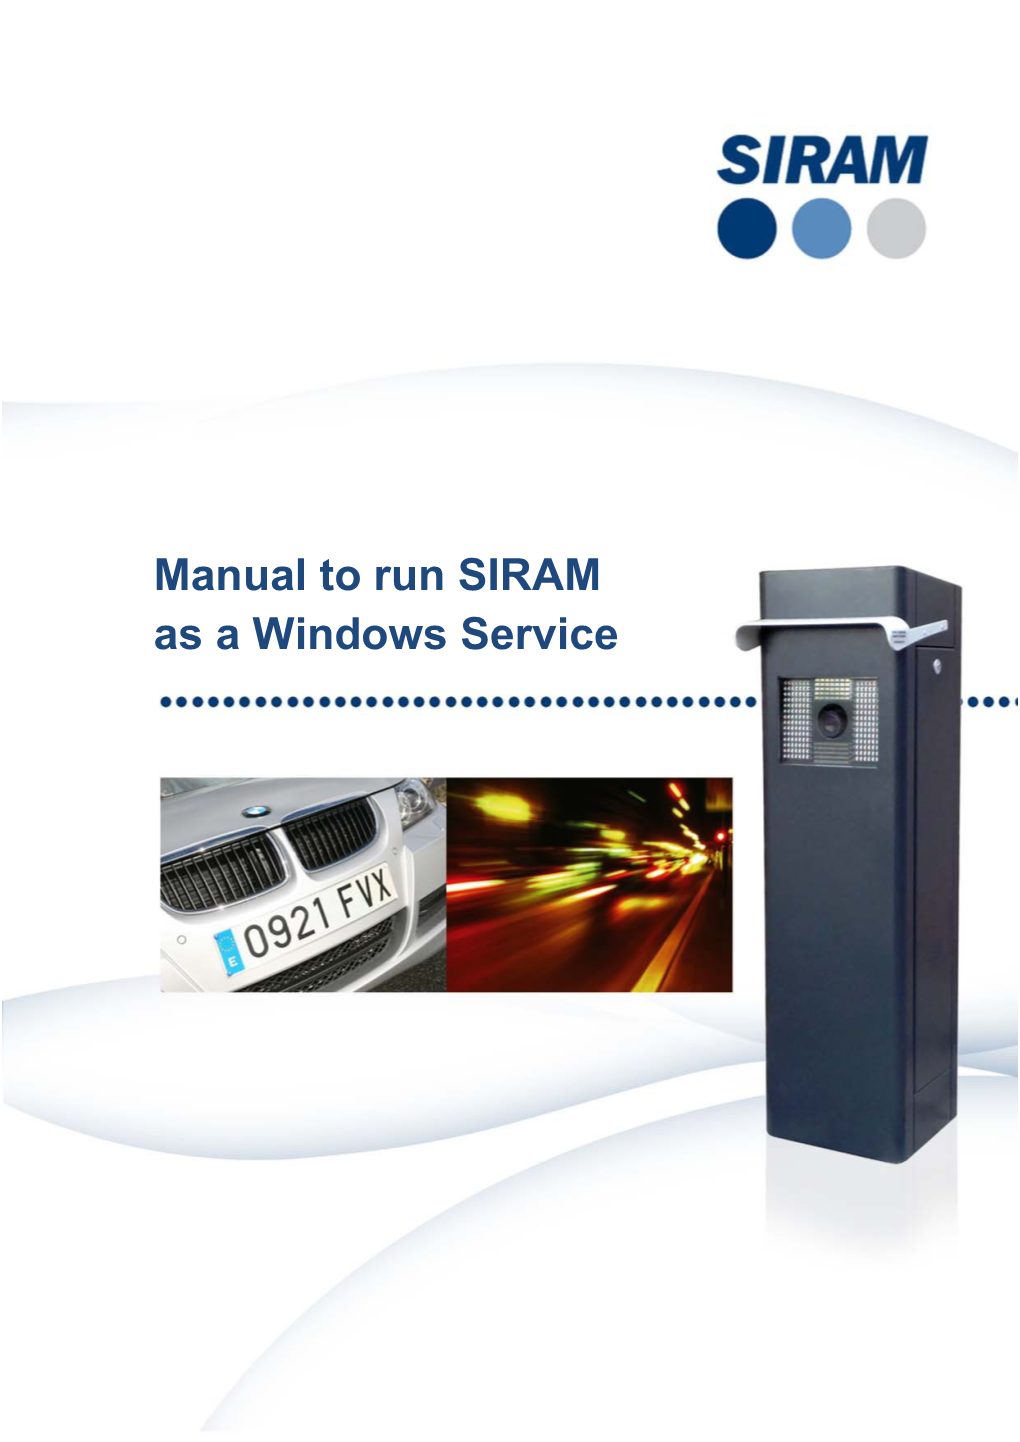 Manual to Run SIRAM As a Windows Service